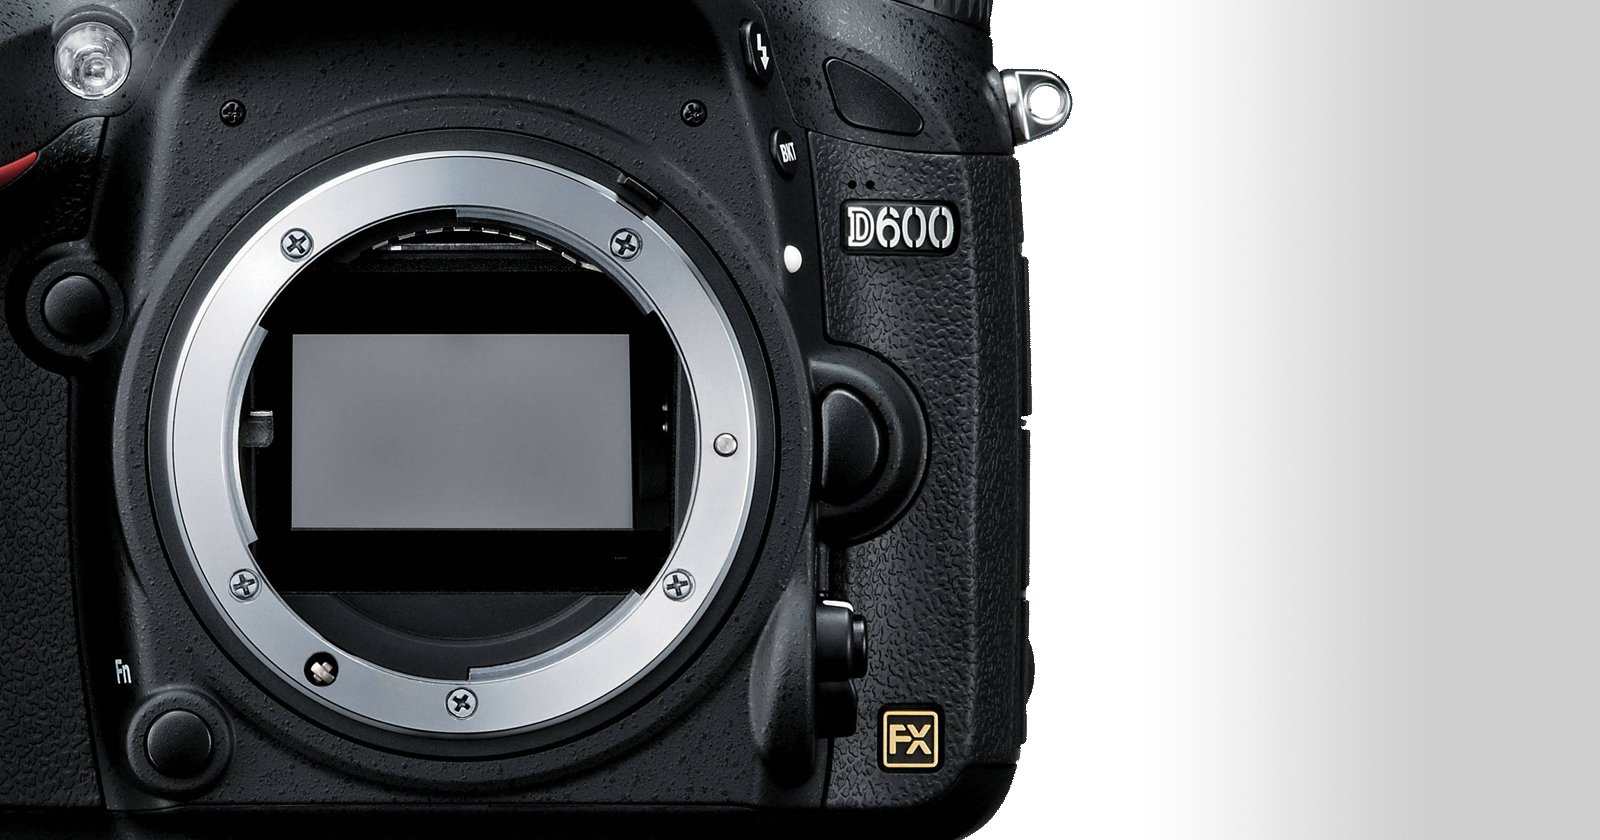 Nikon Is Ending Free D600 Sensor Dust Repairs in 2020